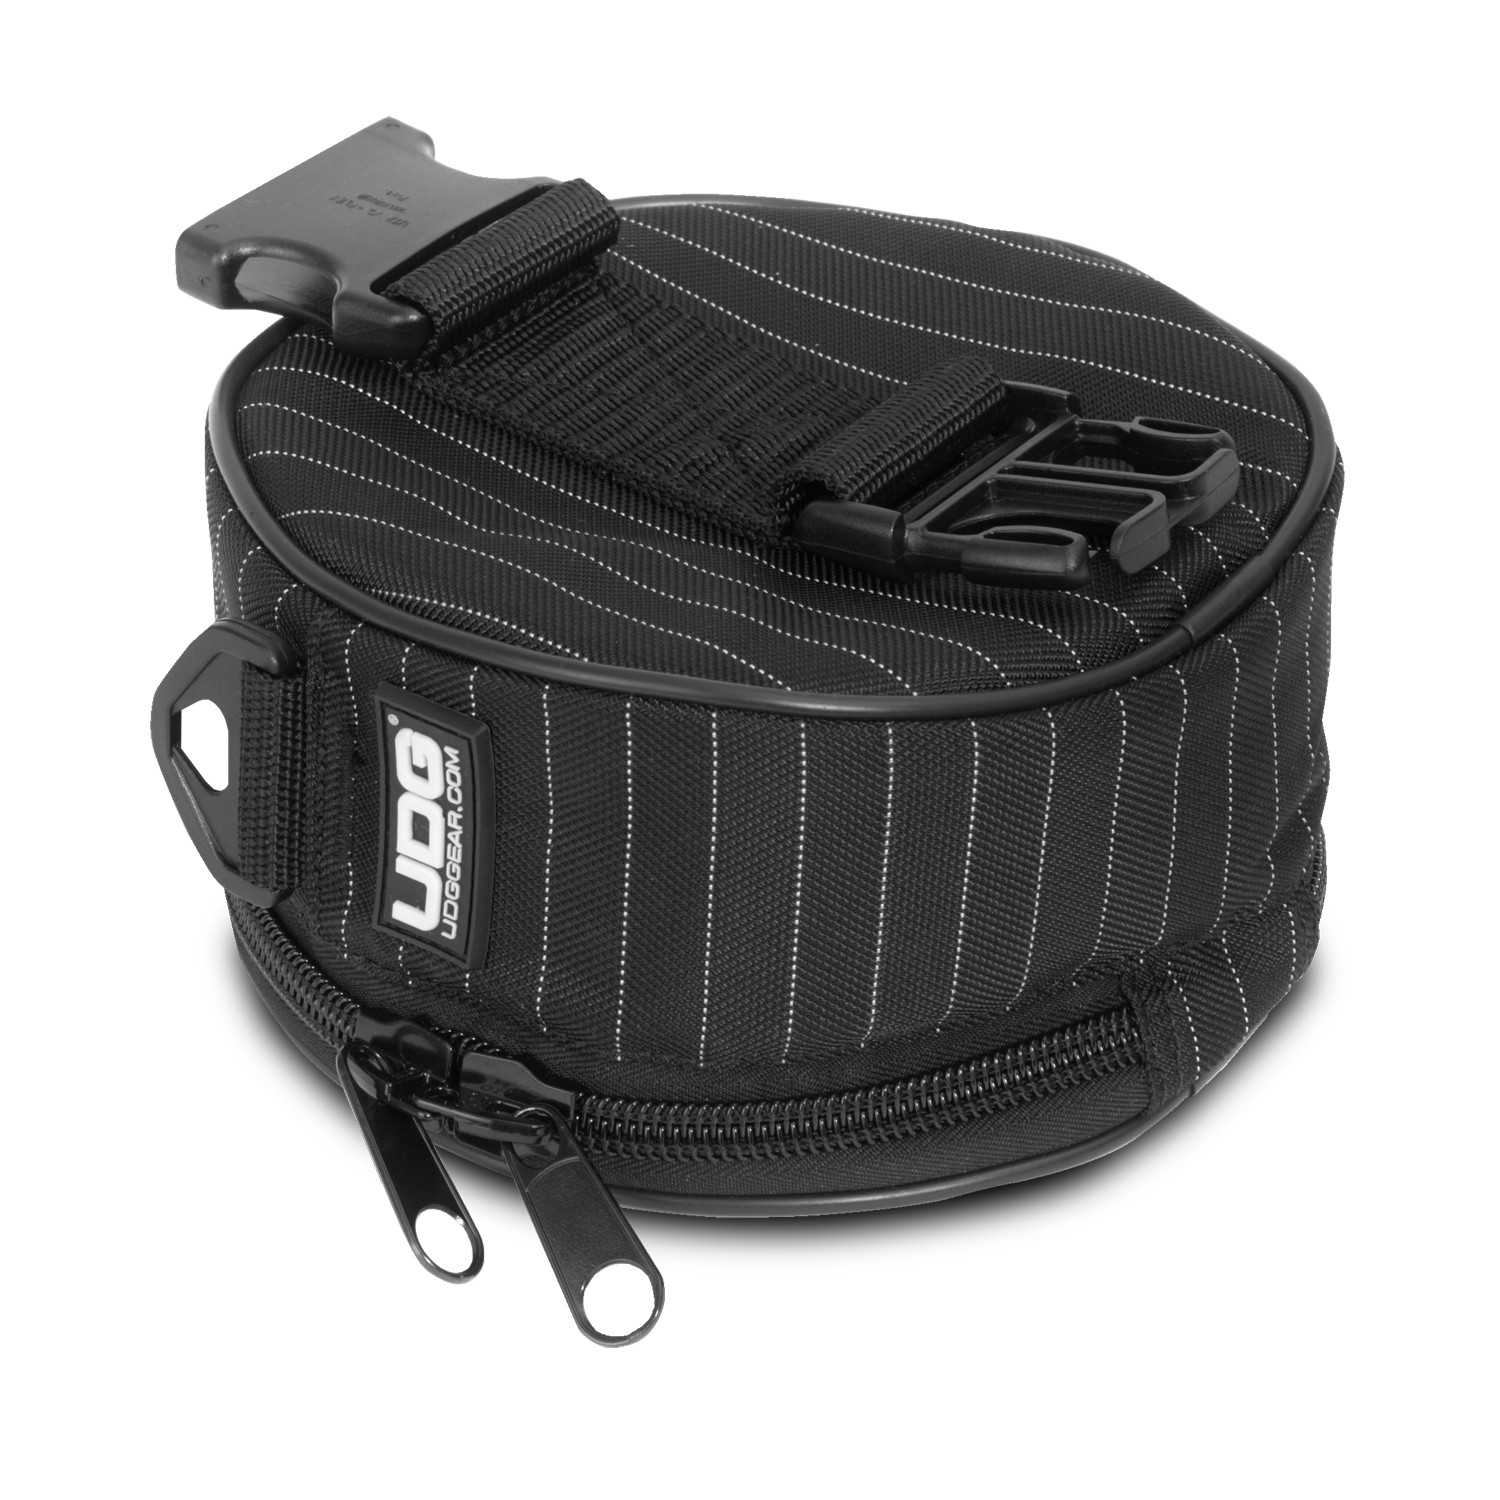 UDG Ultimate Headphone Bag Black/Grey Stripe по цене 2 710 ₽